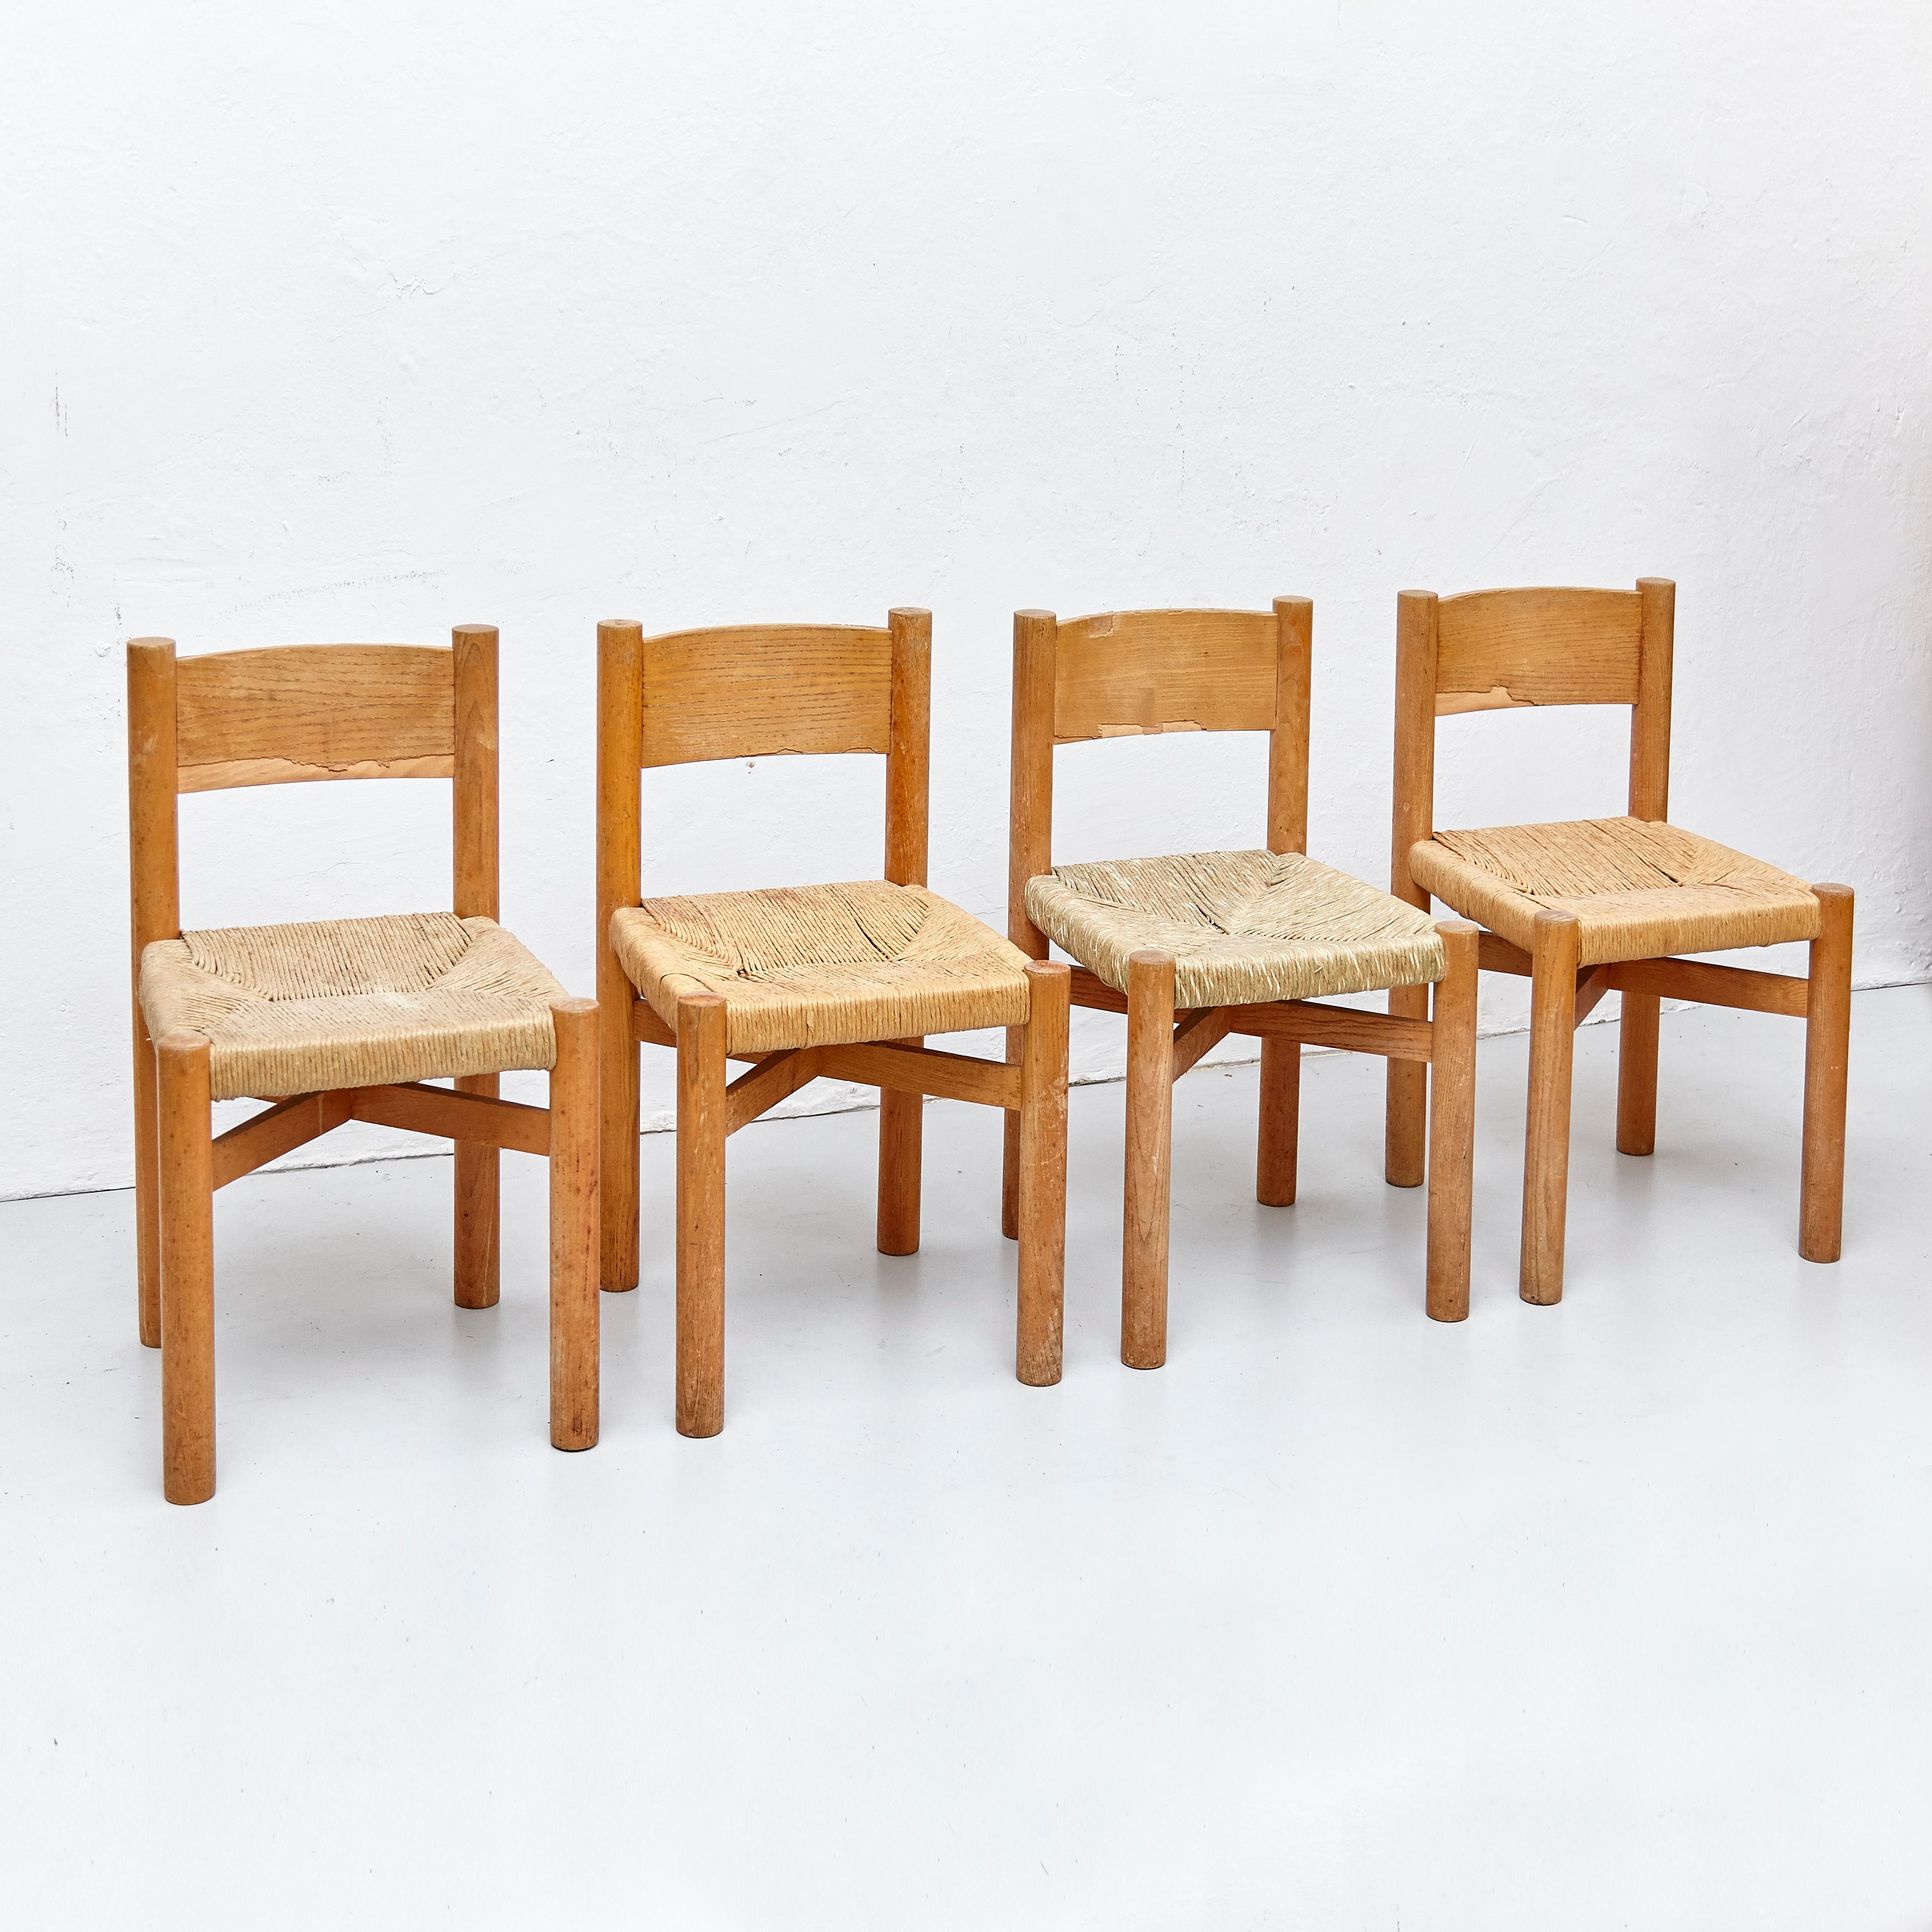 Mid-20th Century Set of 4 Charlotte Perriand Mid-Century Modern Wood Rattan Meribel French Chairs